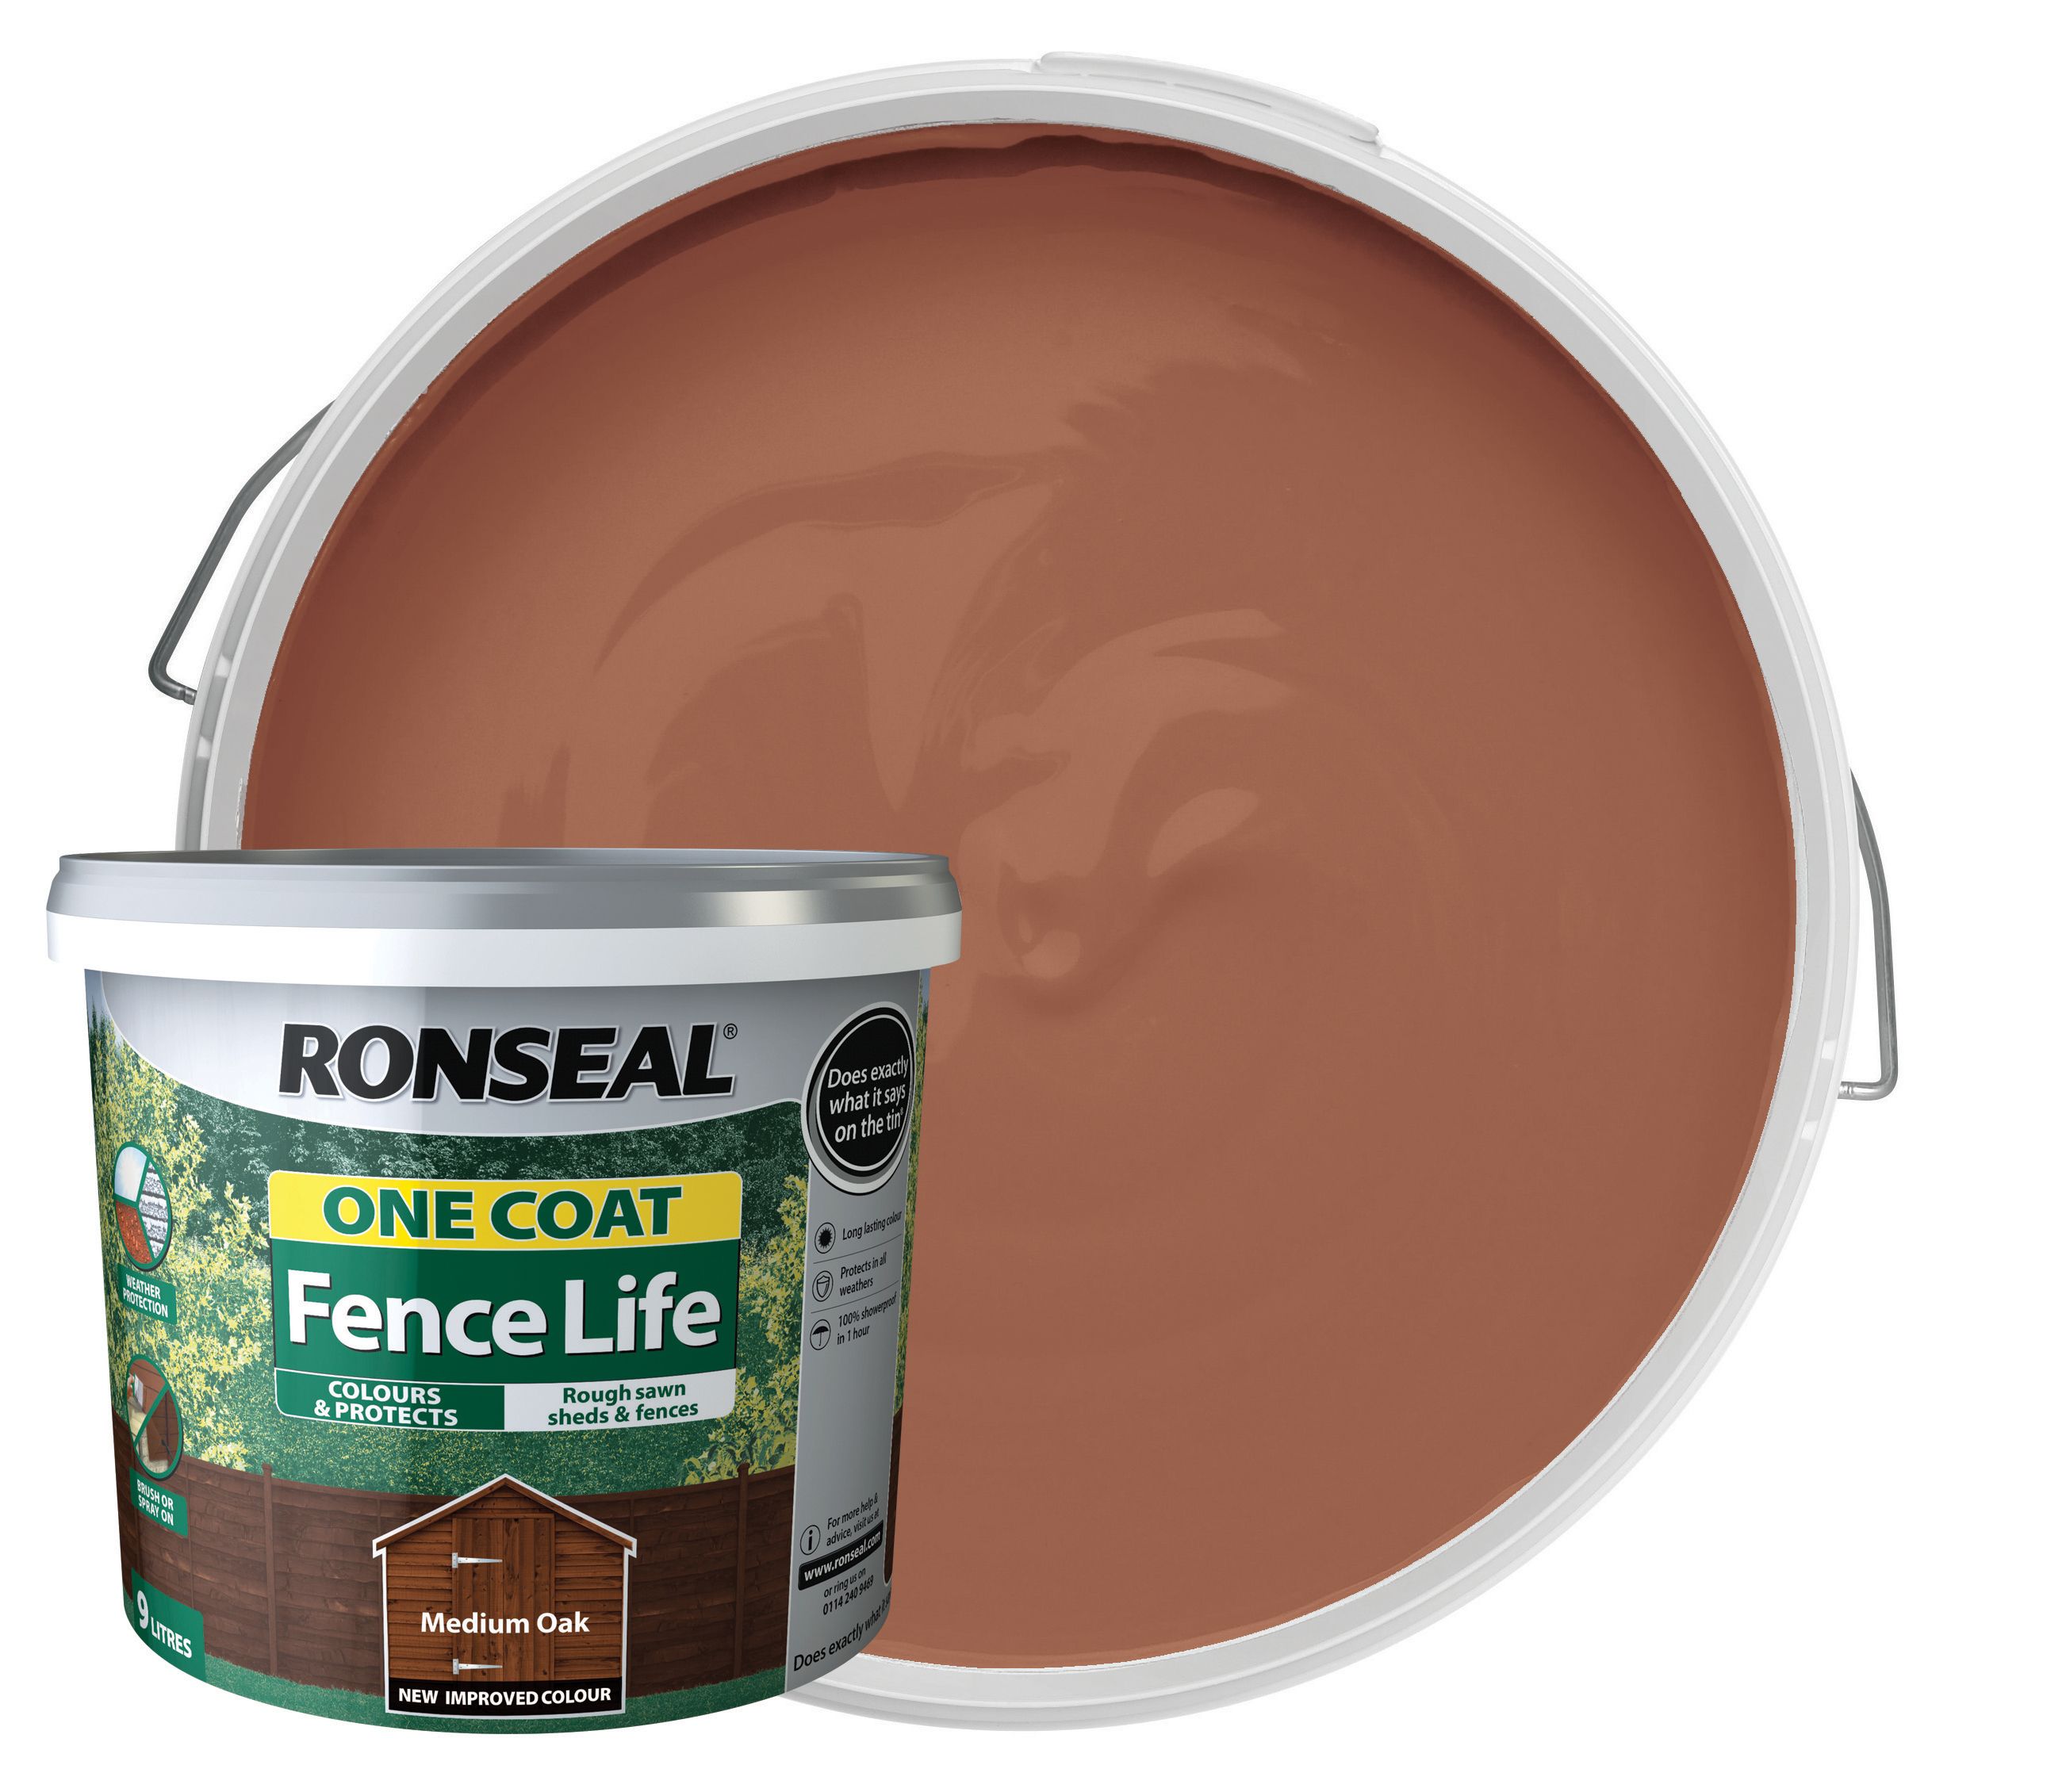 Ronseal One Coat Fence Life Matt Shed & Fence Treatment - Medium Oak - 9L